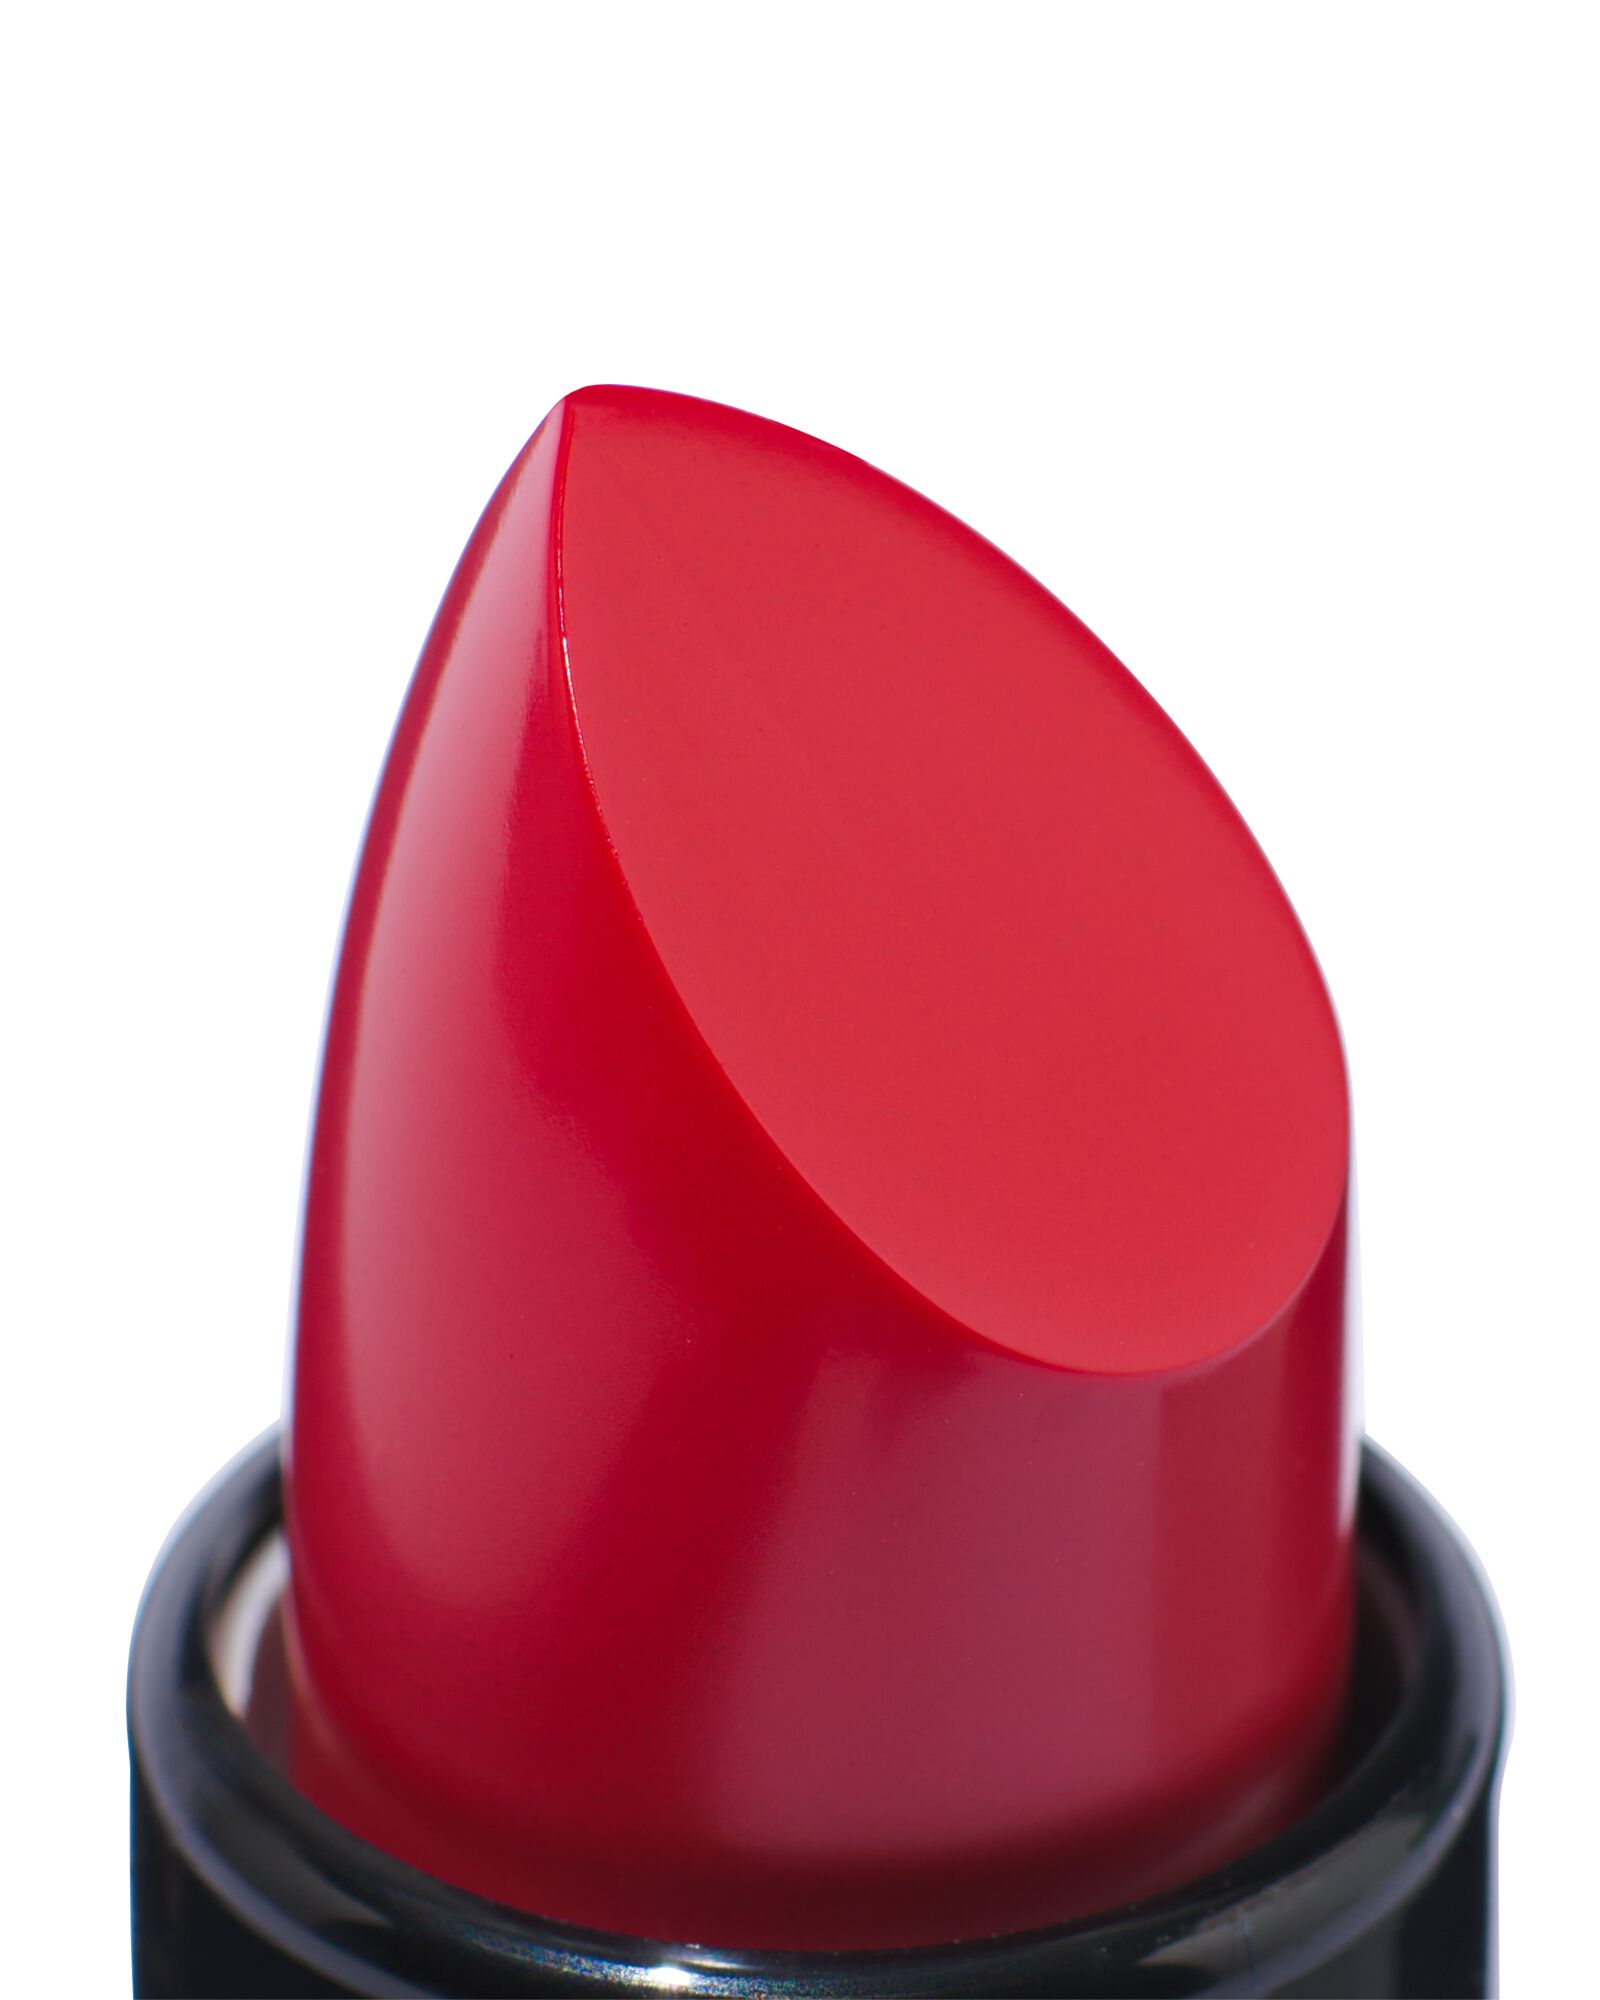 HEMA Moisturising Lipstick 934 Classic Red - Crystal Finish (rouge)